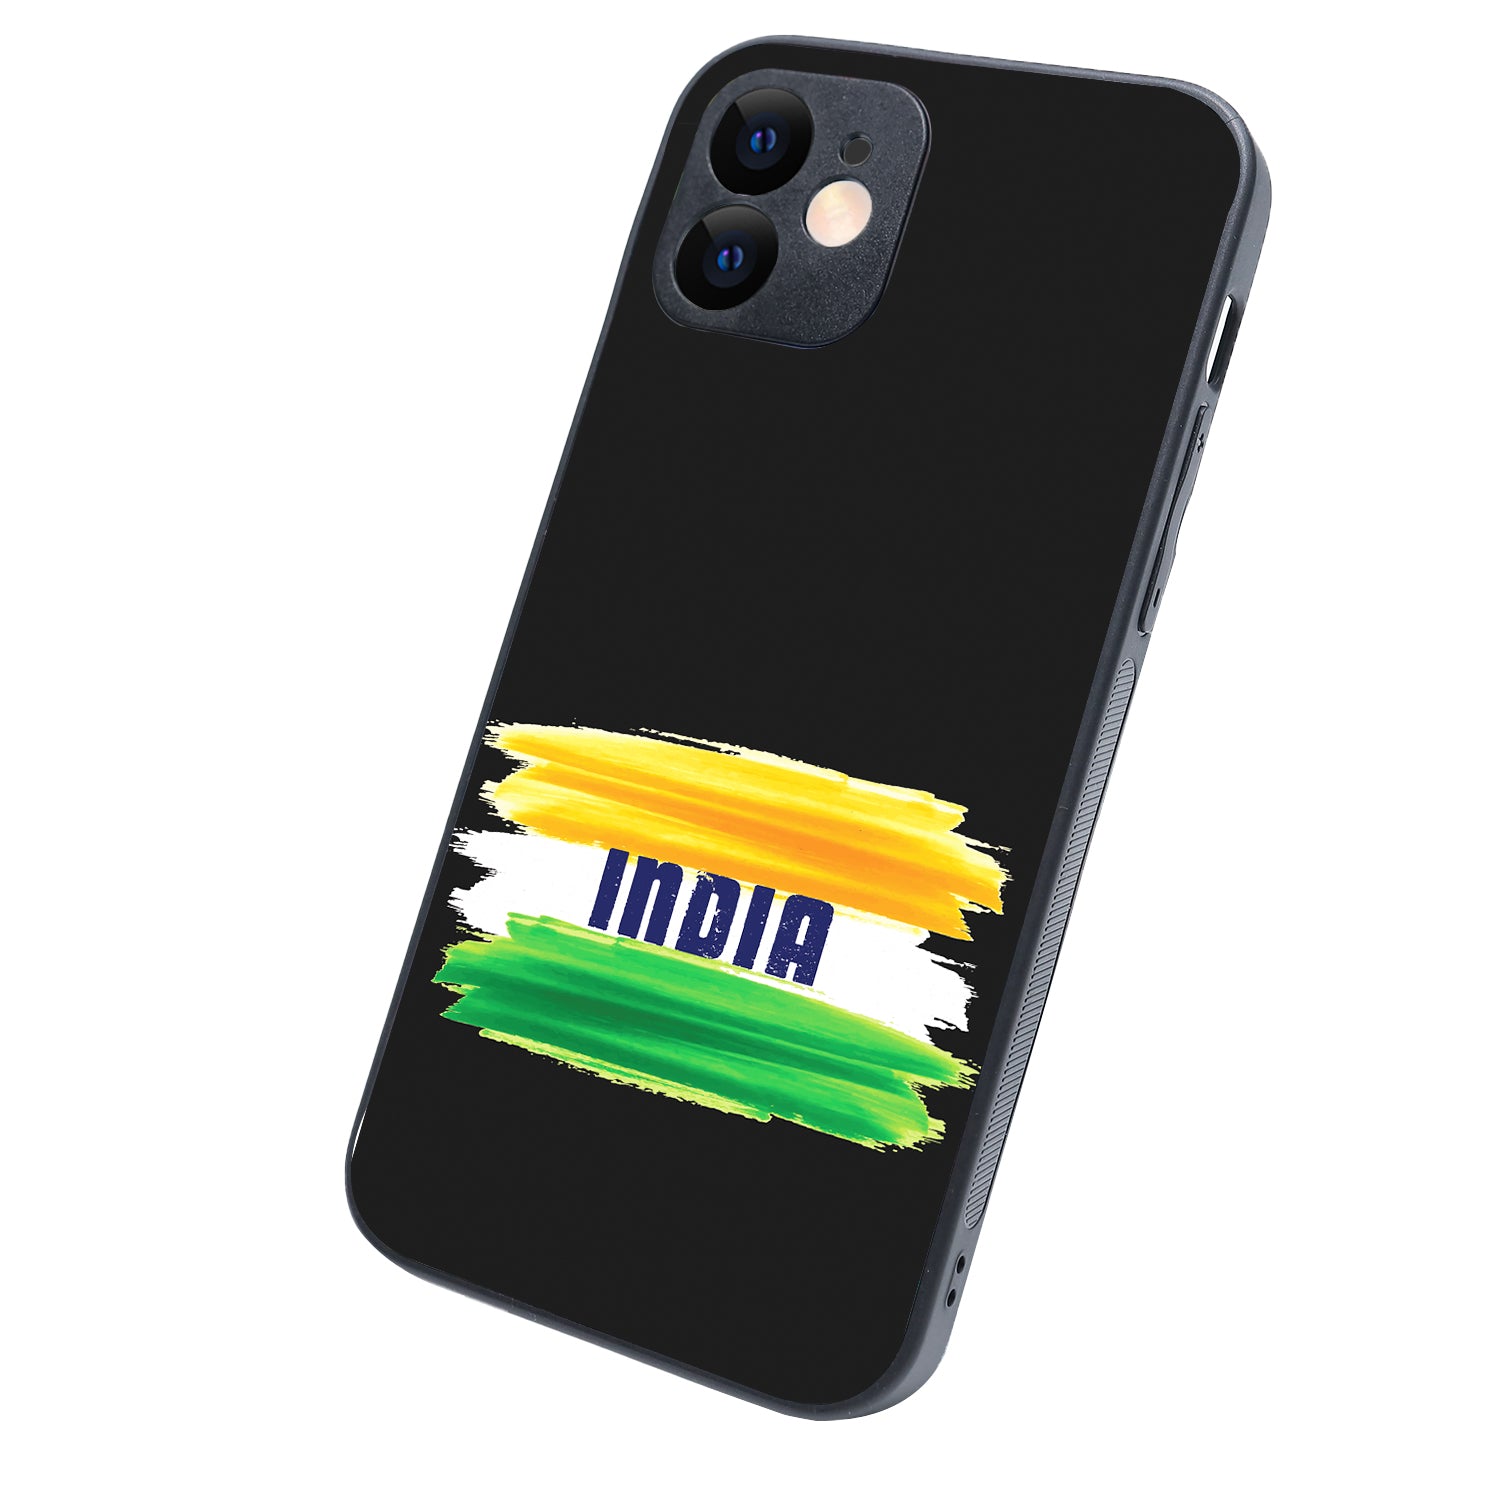 India Flag Indian iPhone 12 Case